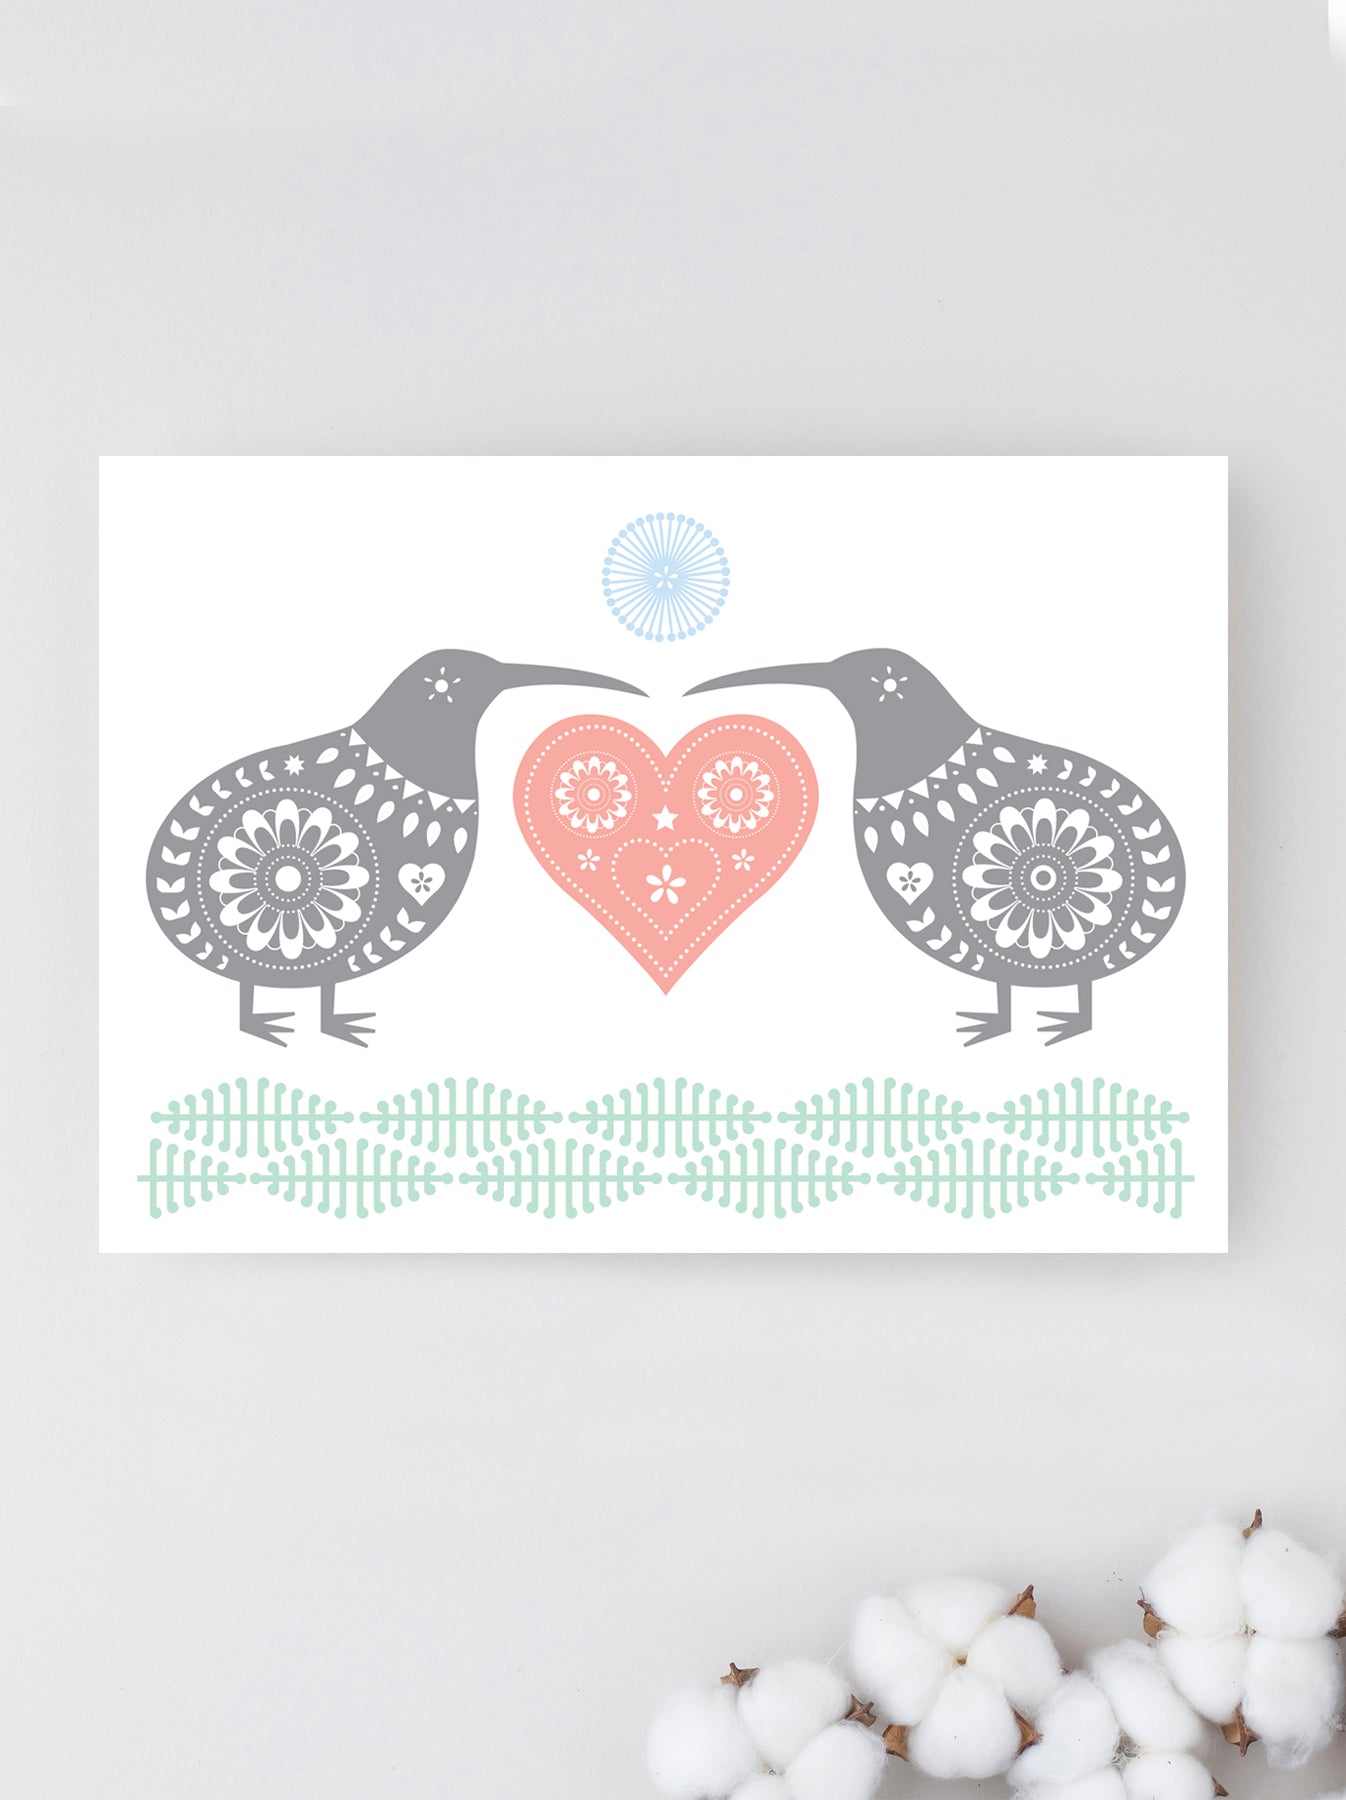 Kiwi Folk Art Love (Aroha), New Zealand Kiwi Bird with Love Heart Engagement or Wedding Greeting Card